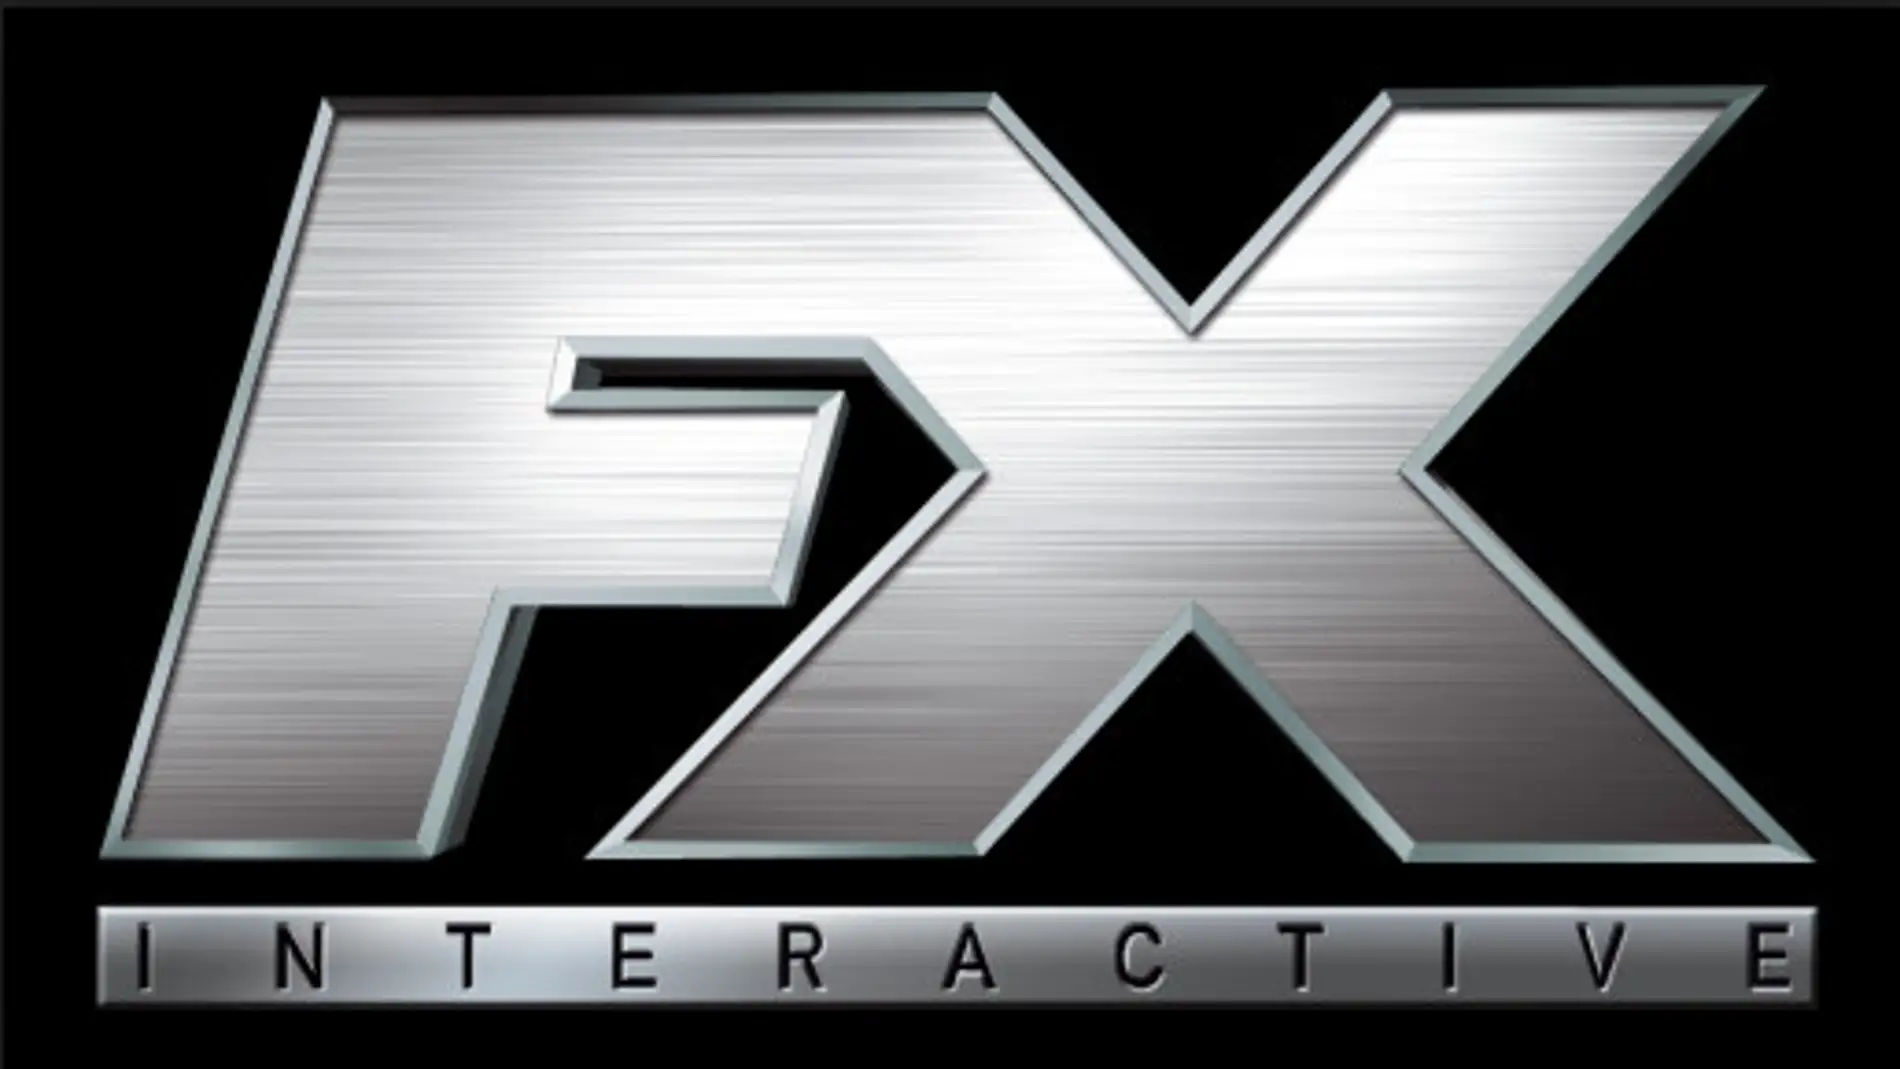 FX Interactive